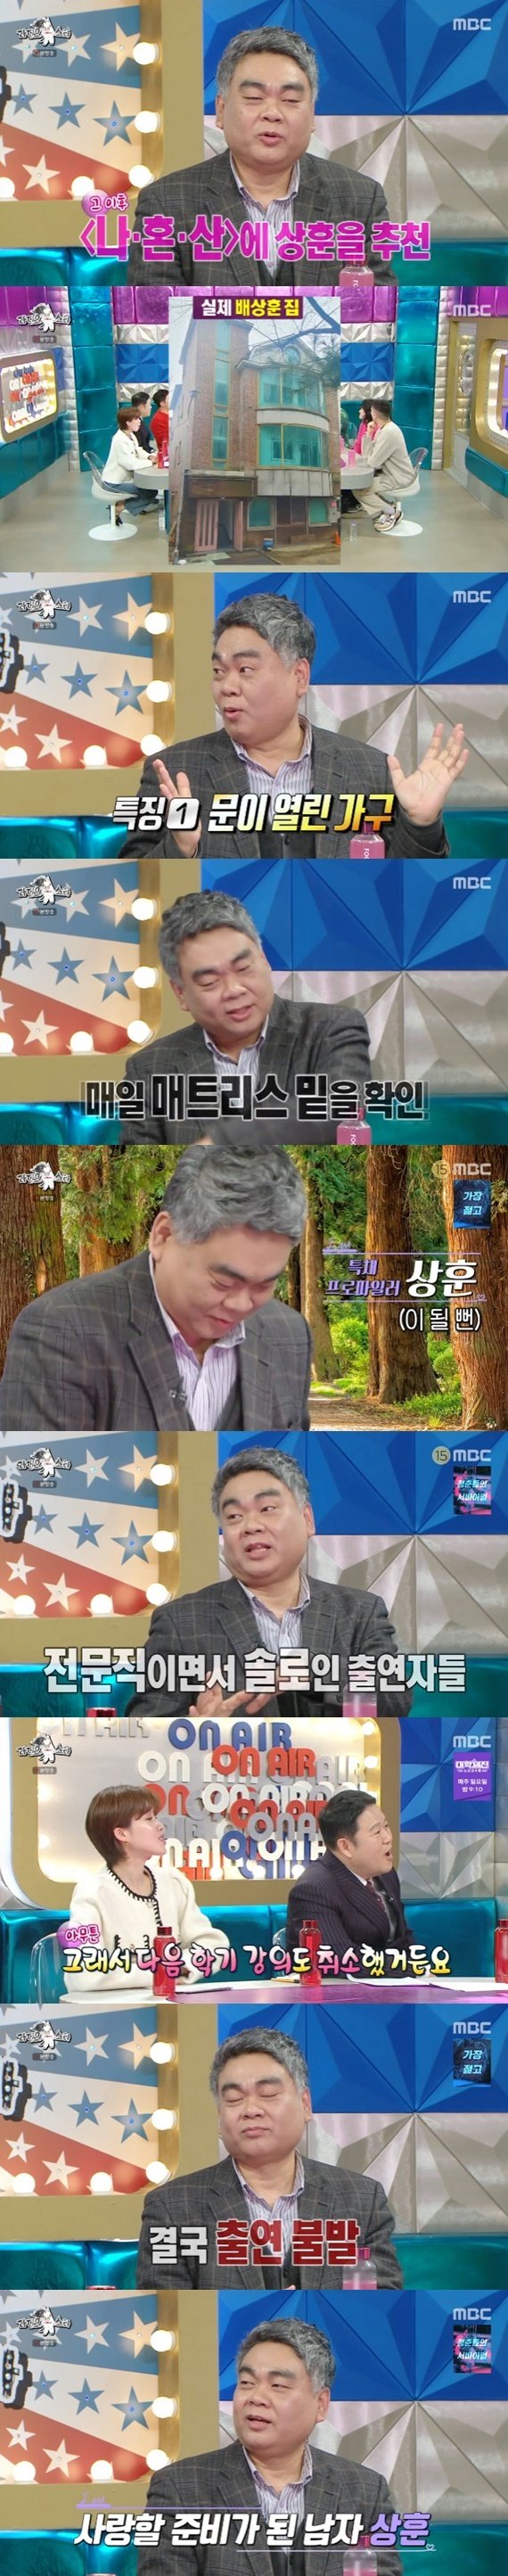 MBC ‘라디오스타’ 캡처